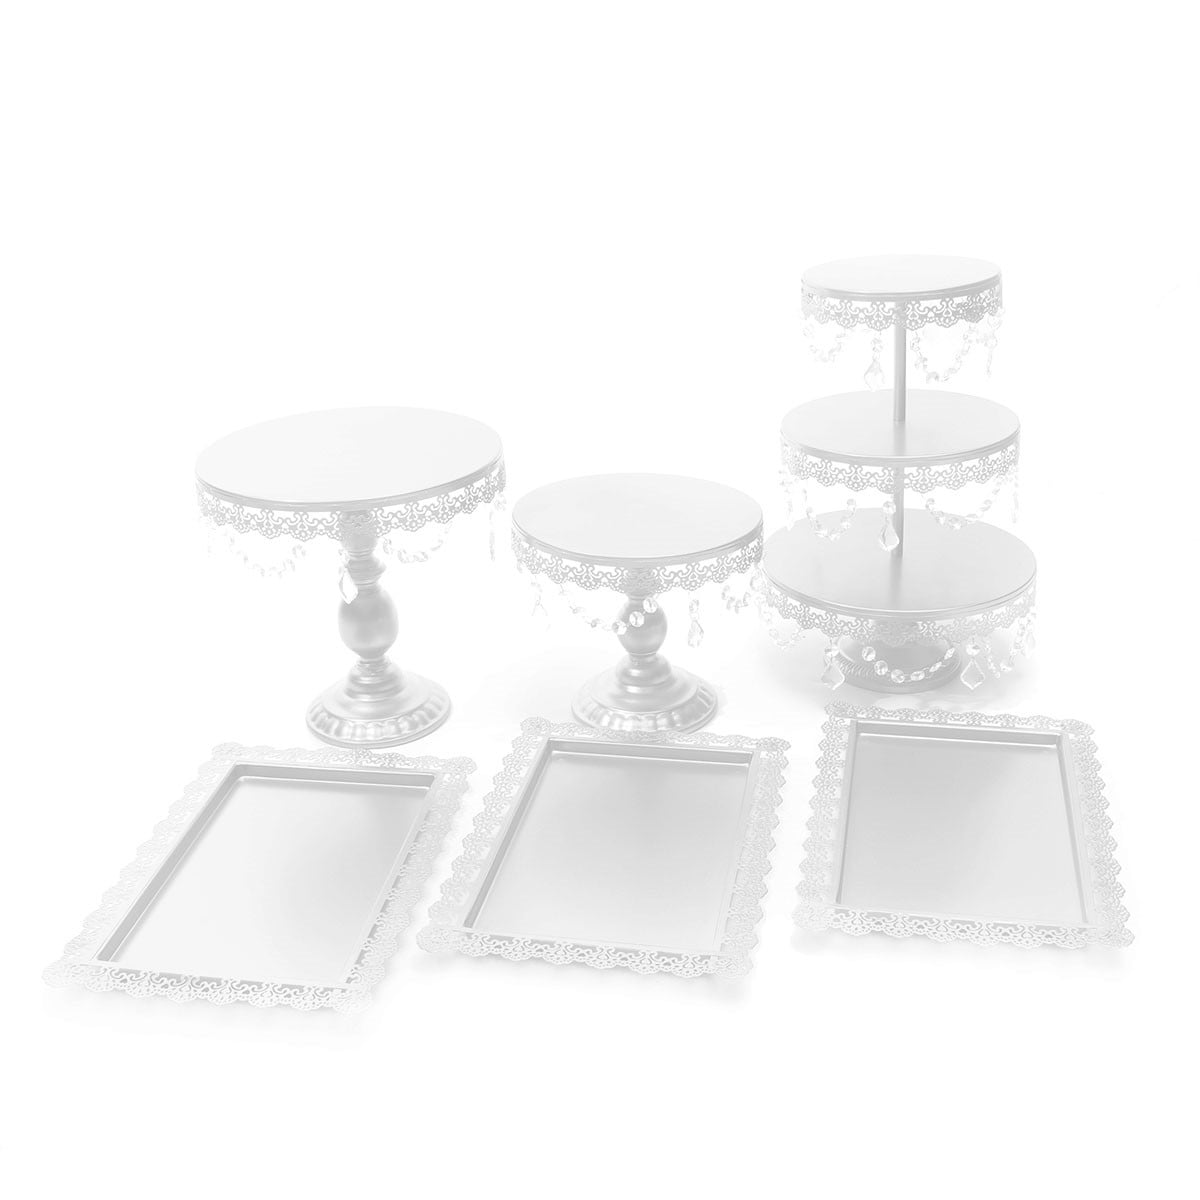 6PCS Wedding Cake Stand Crystal Decor Metal Cupcake Holder Dishes Plates Set 